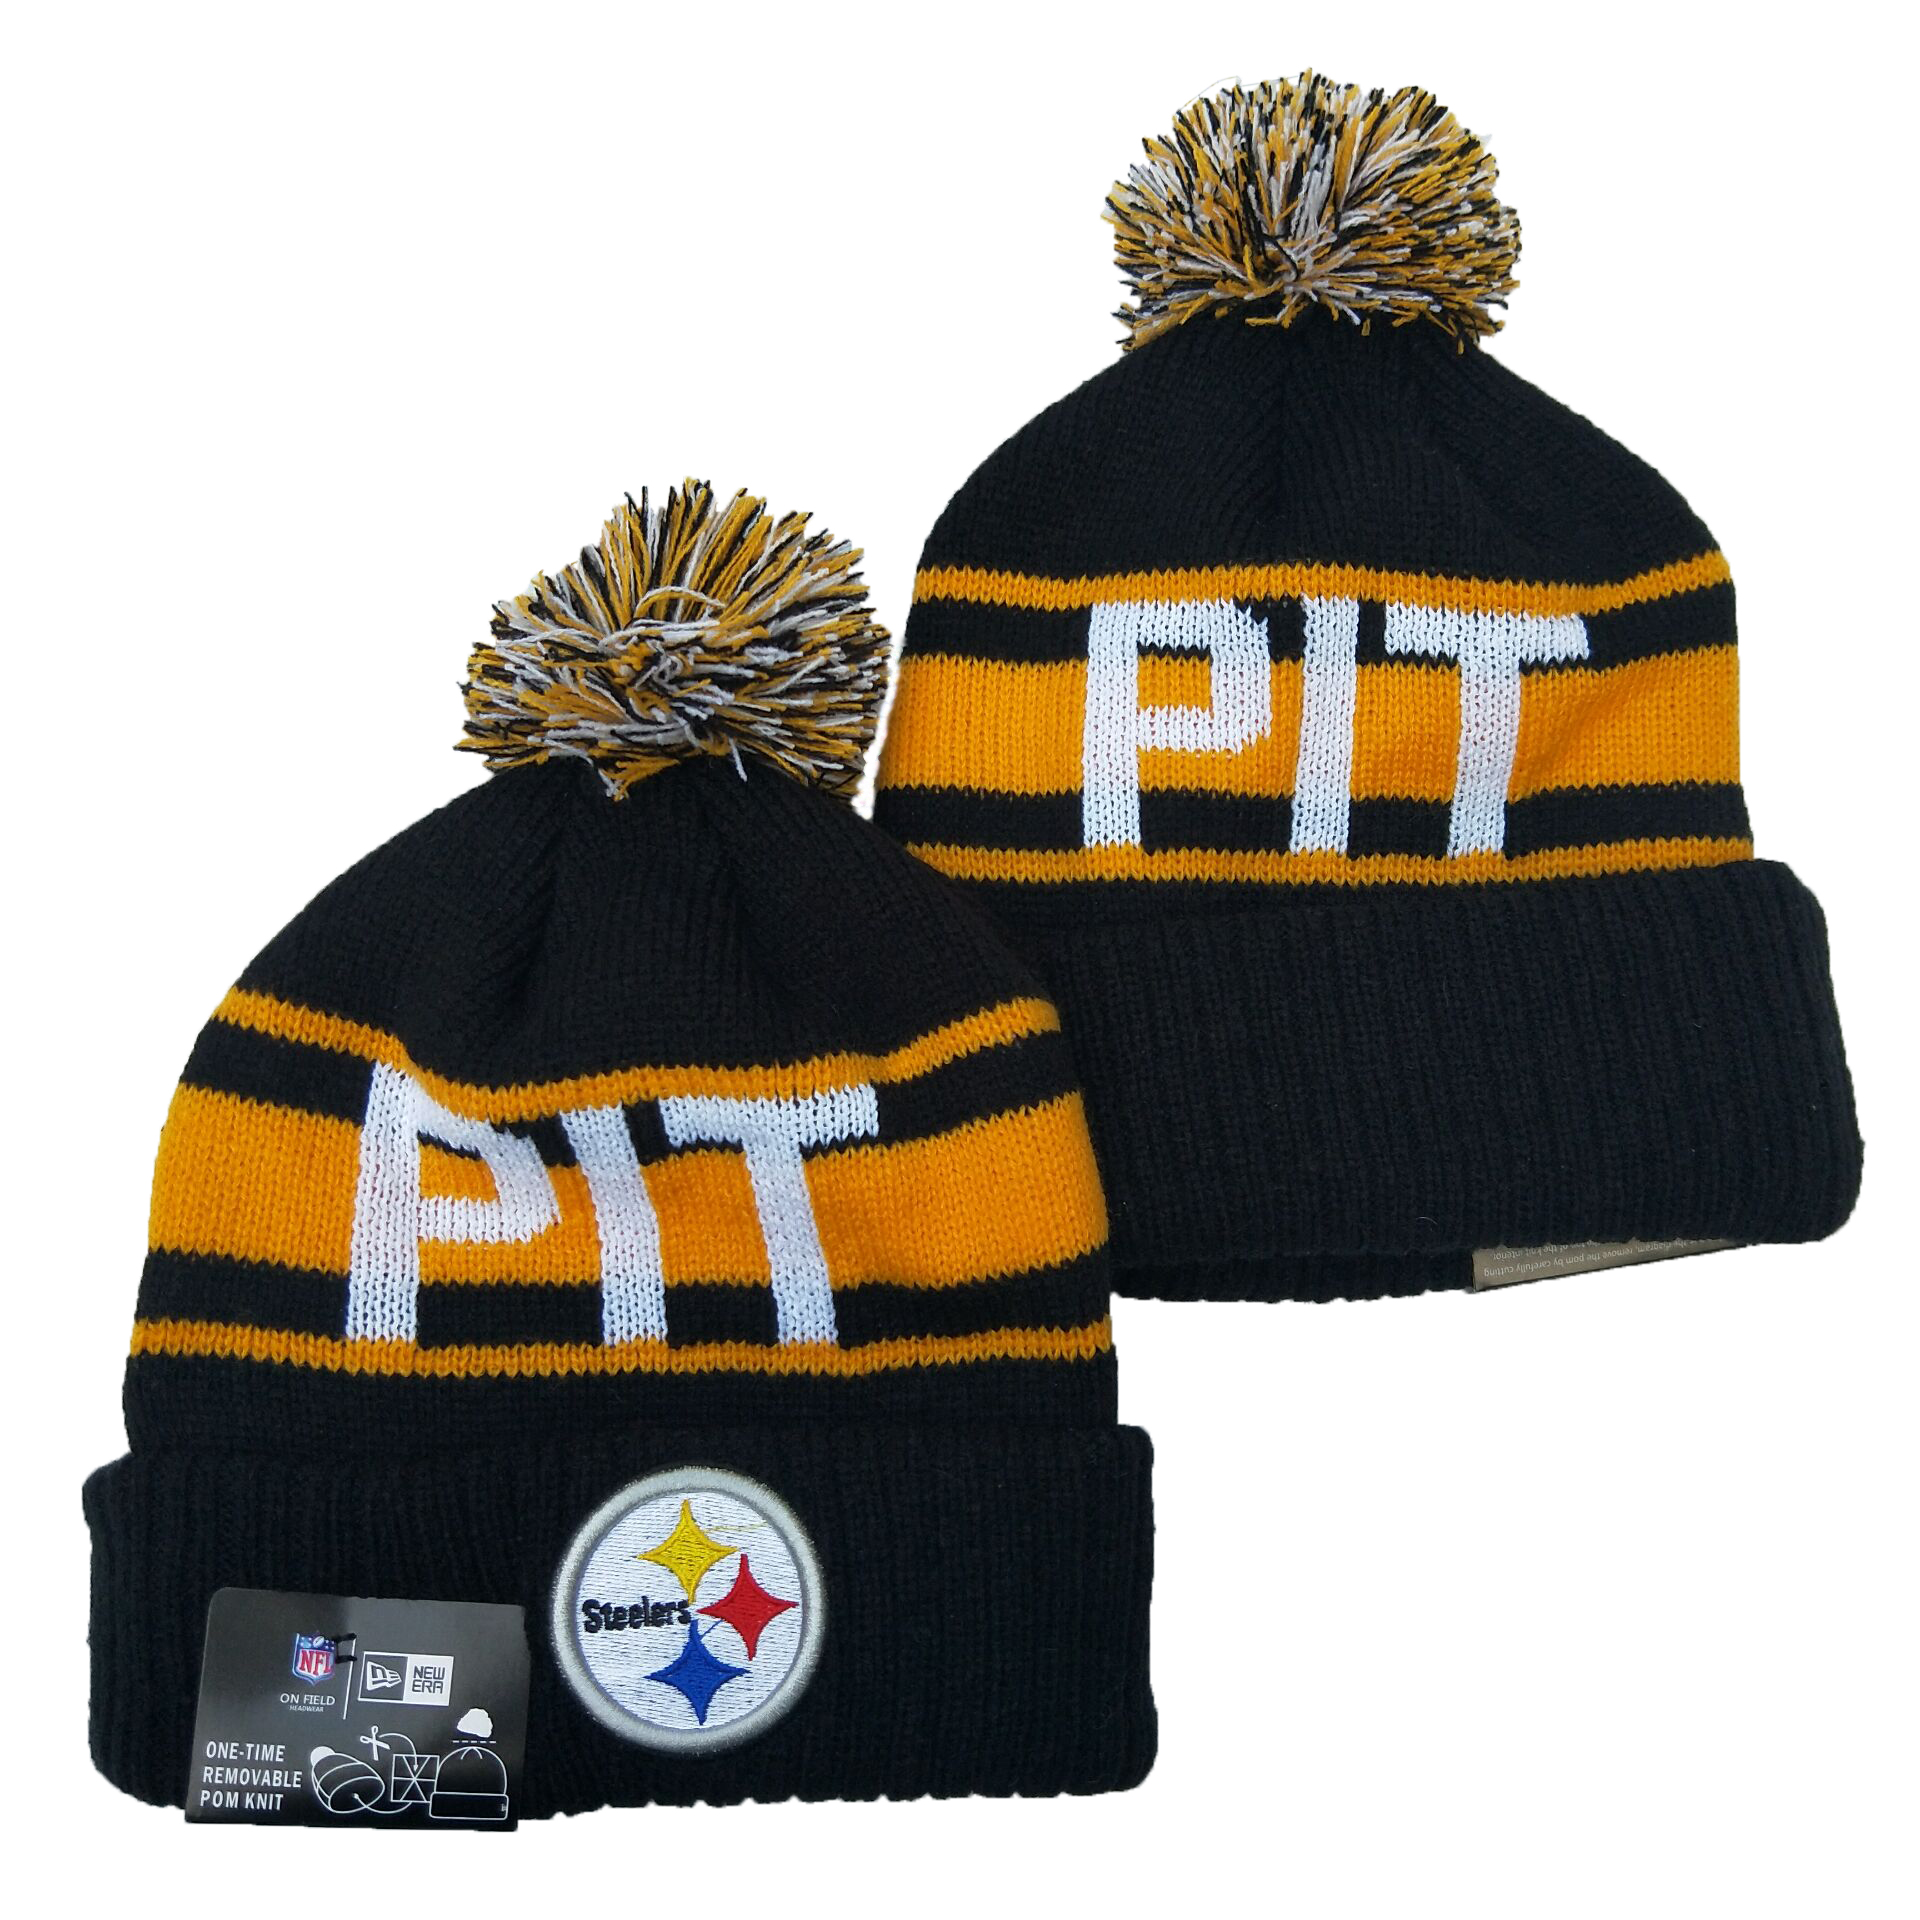 Steelers Team Logo Black Yellow Pom Knit Hat YD